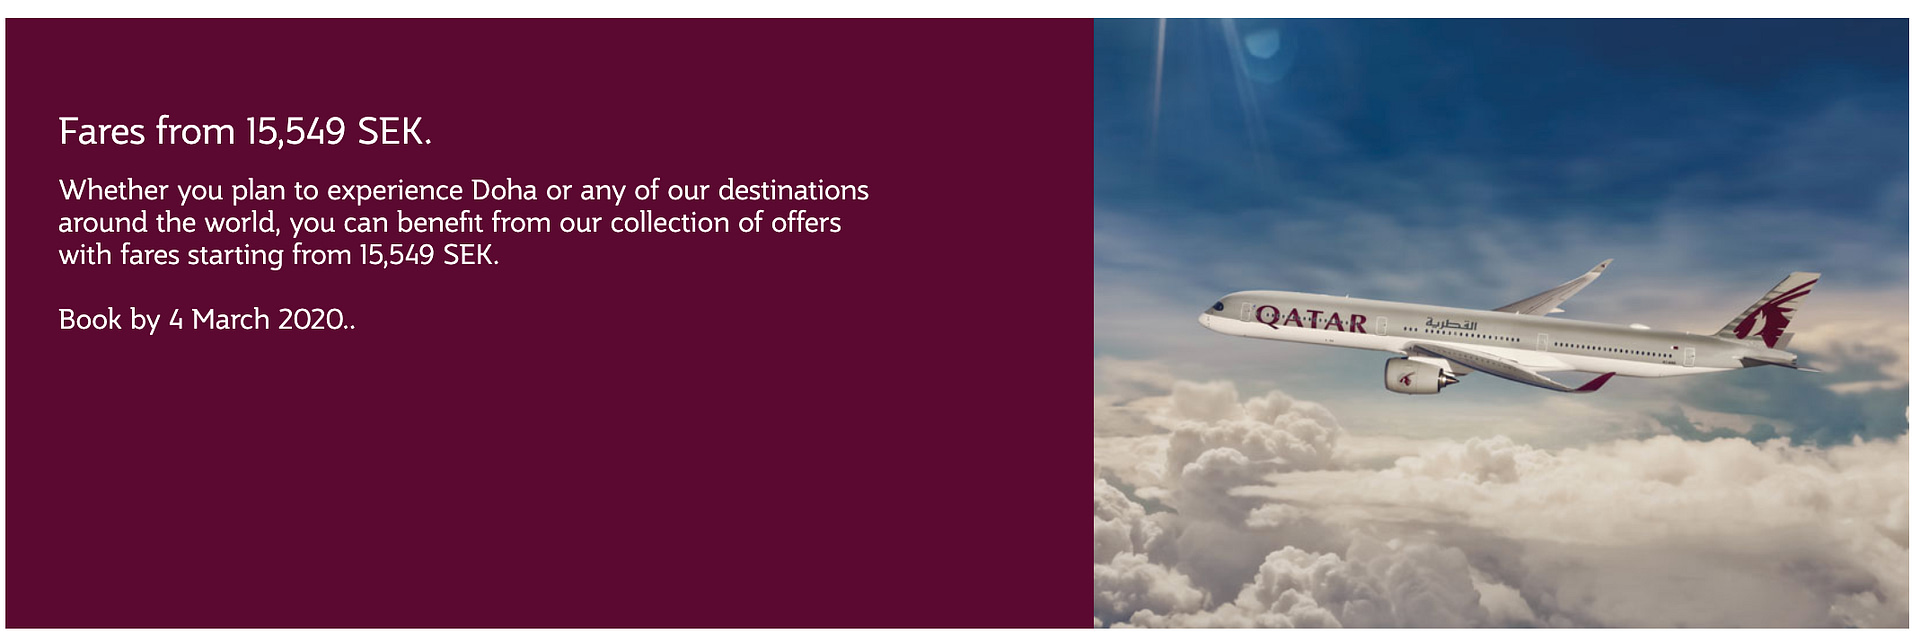 Qatar airways Qsuites from 15549 SEK promotion